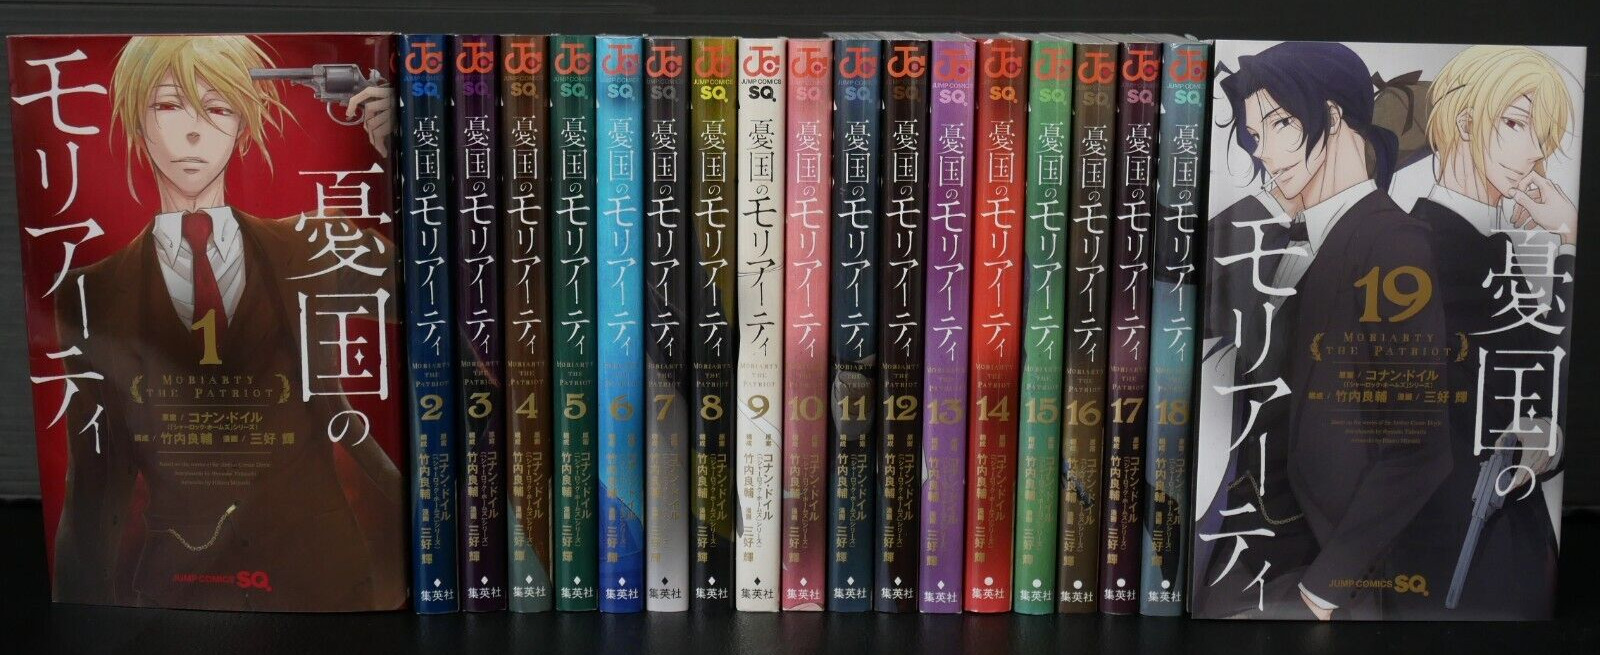 Ryosuke Takeuchi, Hikaru Miyoshi manga: Moriarty the Patriot 1-19 Complete Set